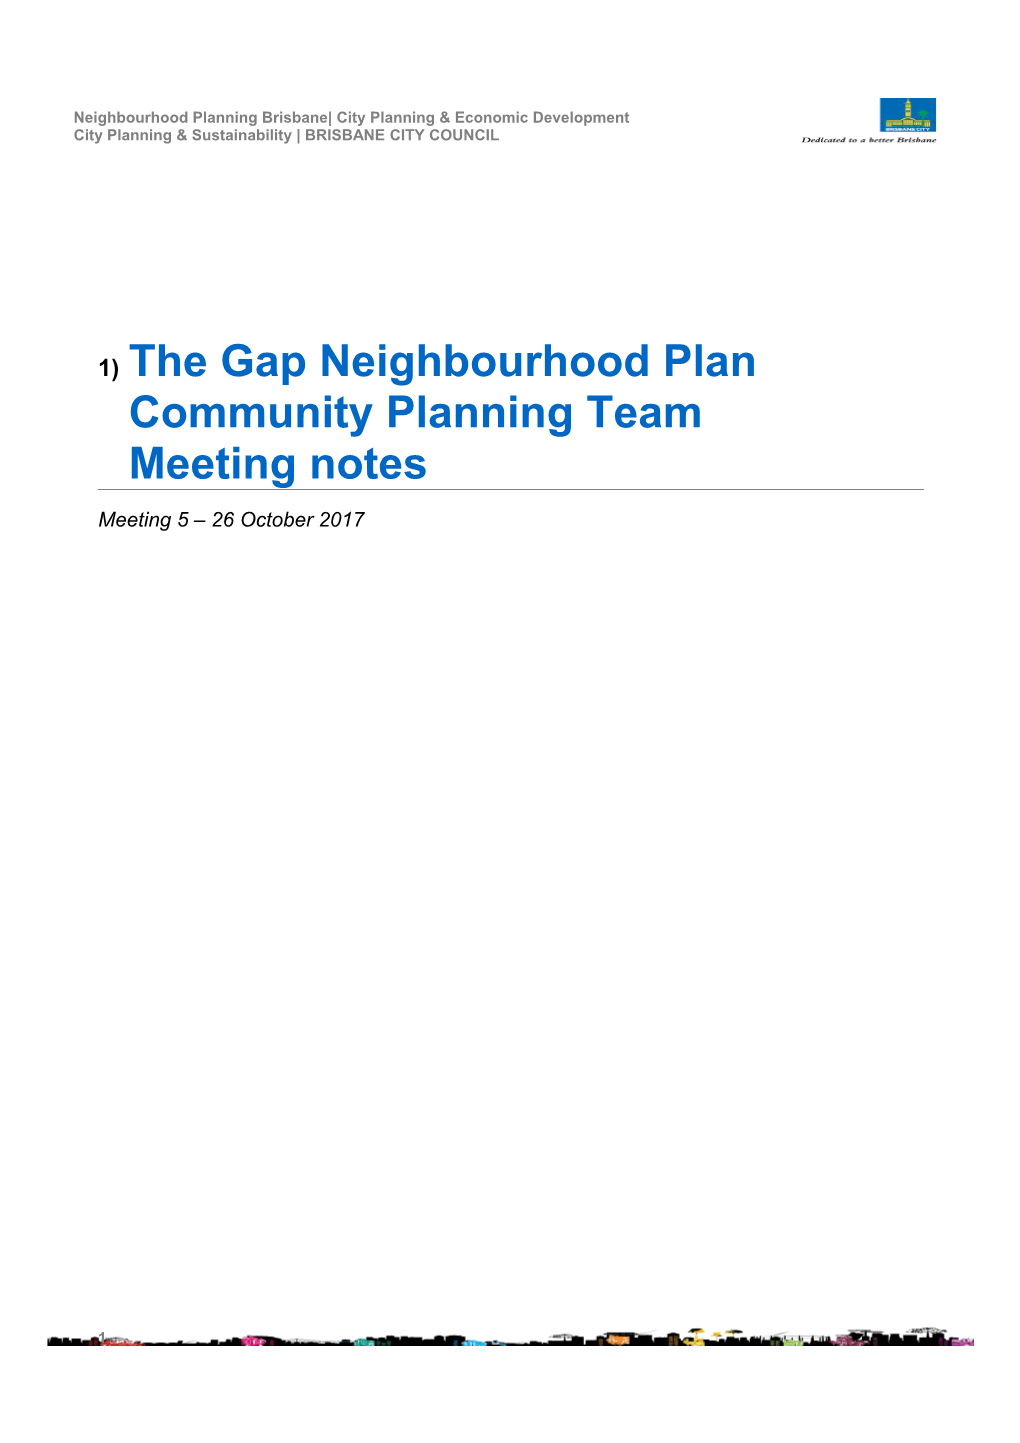 The Gap Neighbourhood Plancommunity Planning Teammeeting Notes